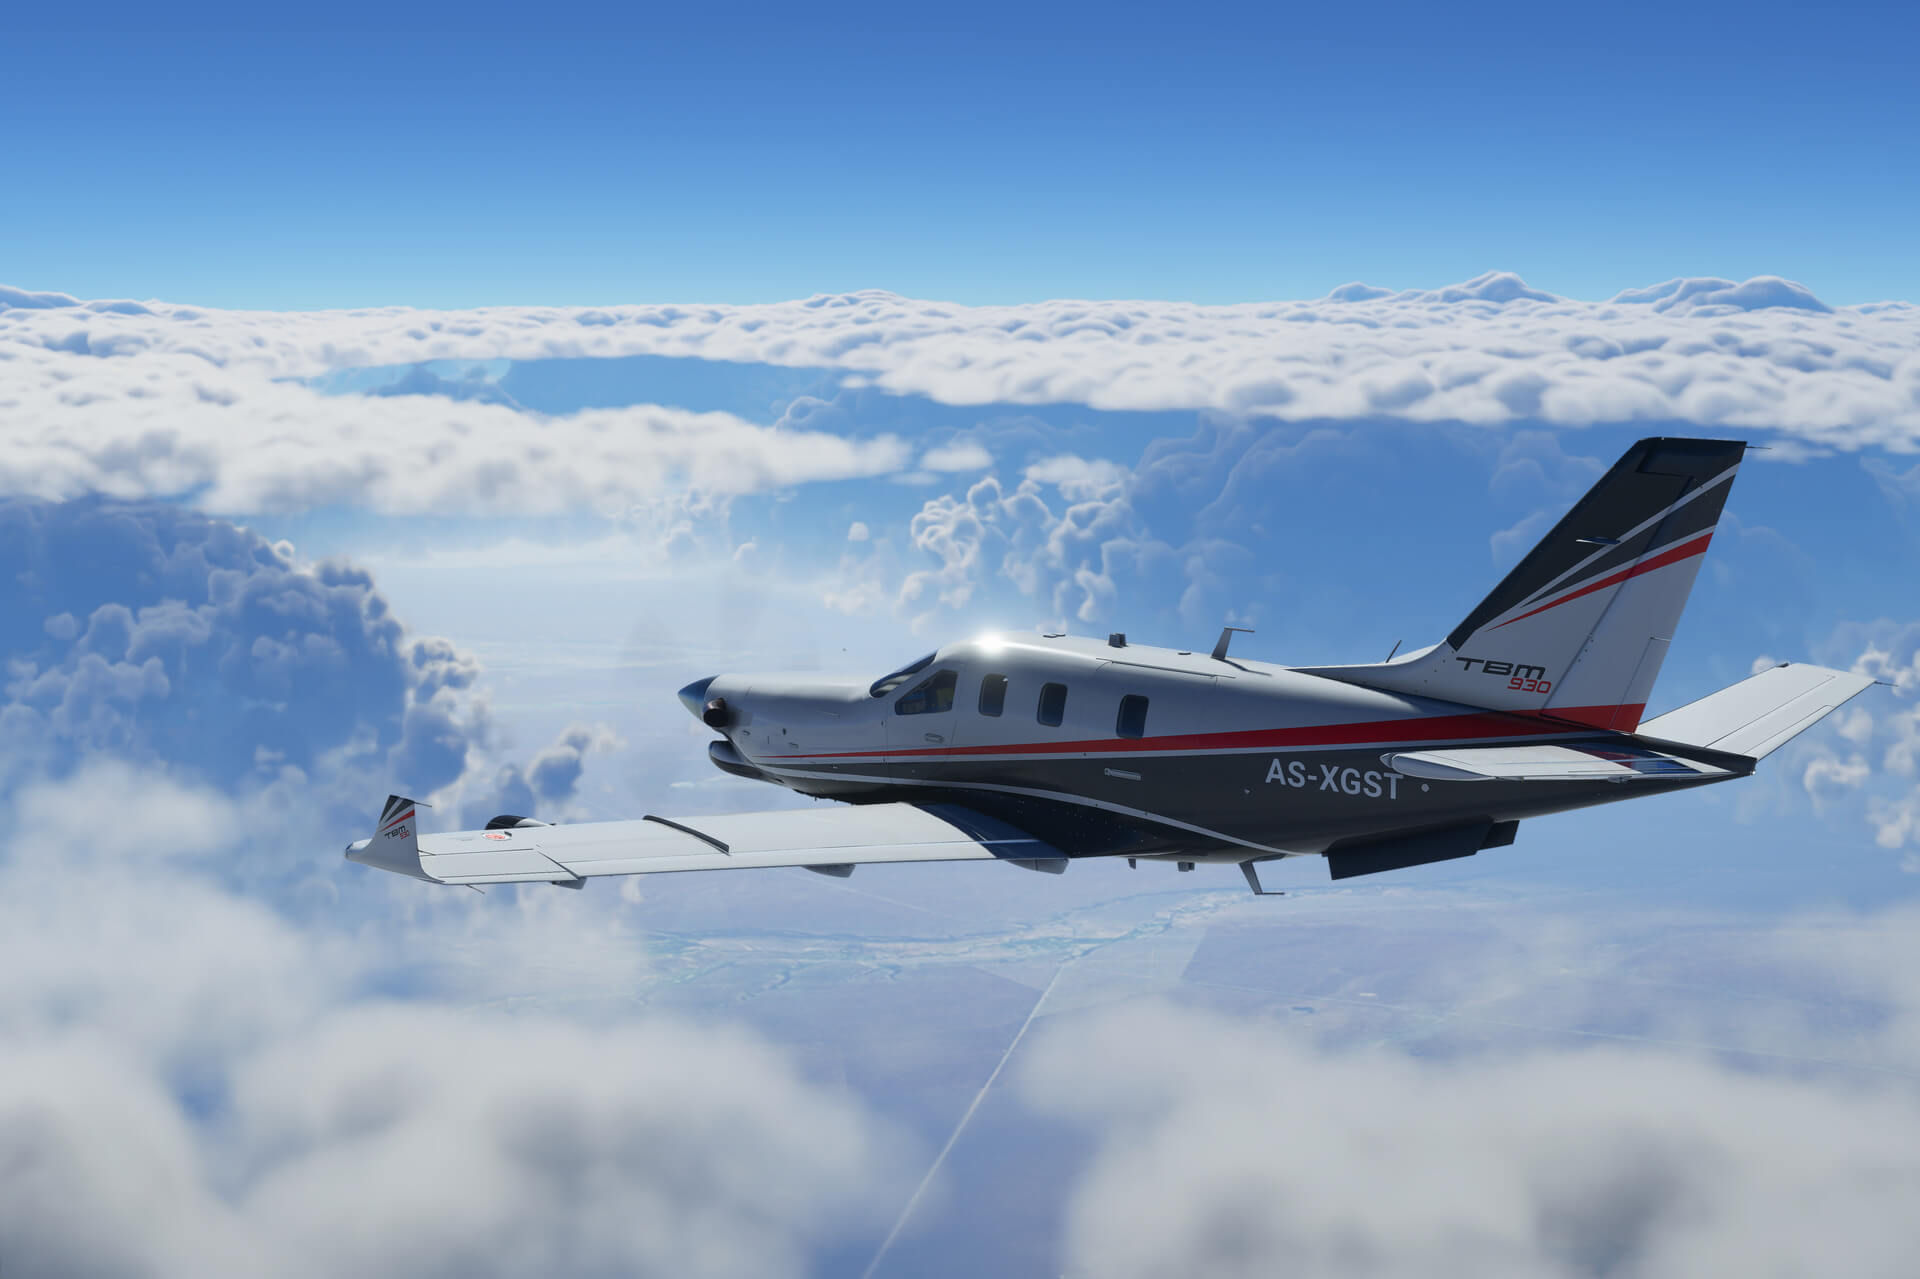 microsoft flight simulator pc game